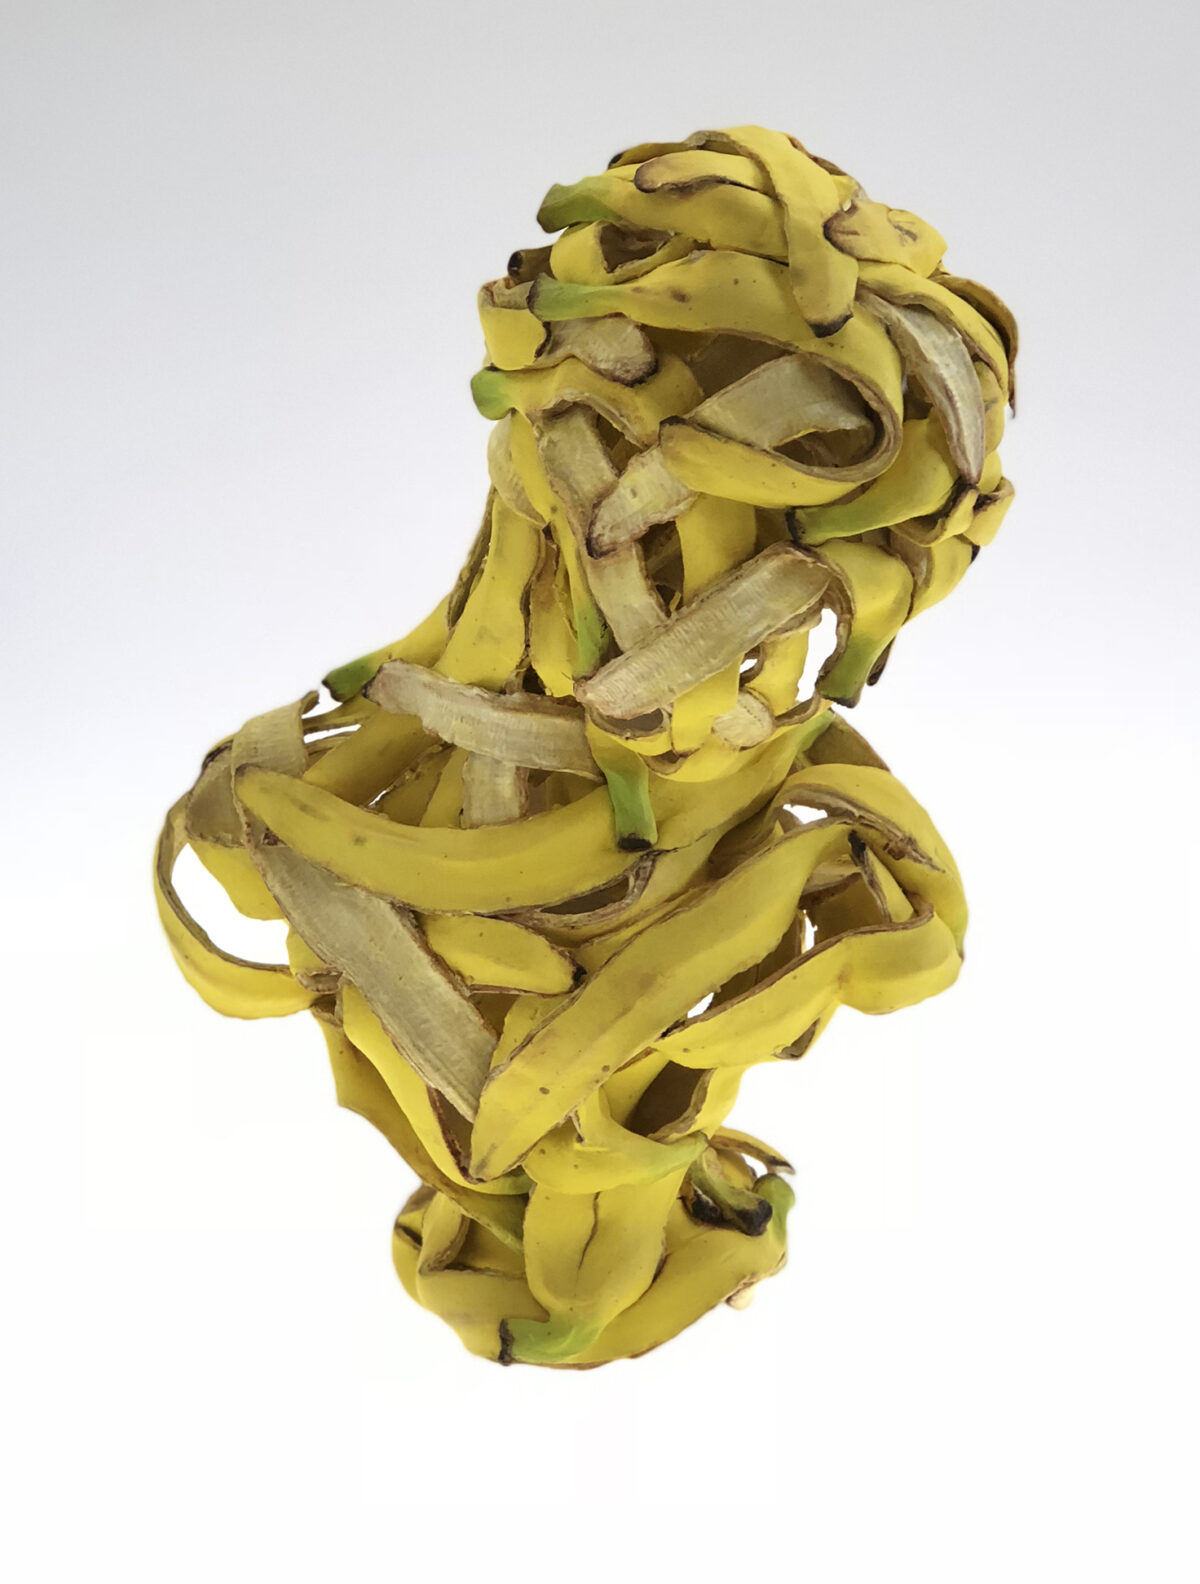 Surreal Bananas Amusing Ceramic Sculptures By Koji Kasatani 15